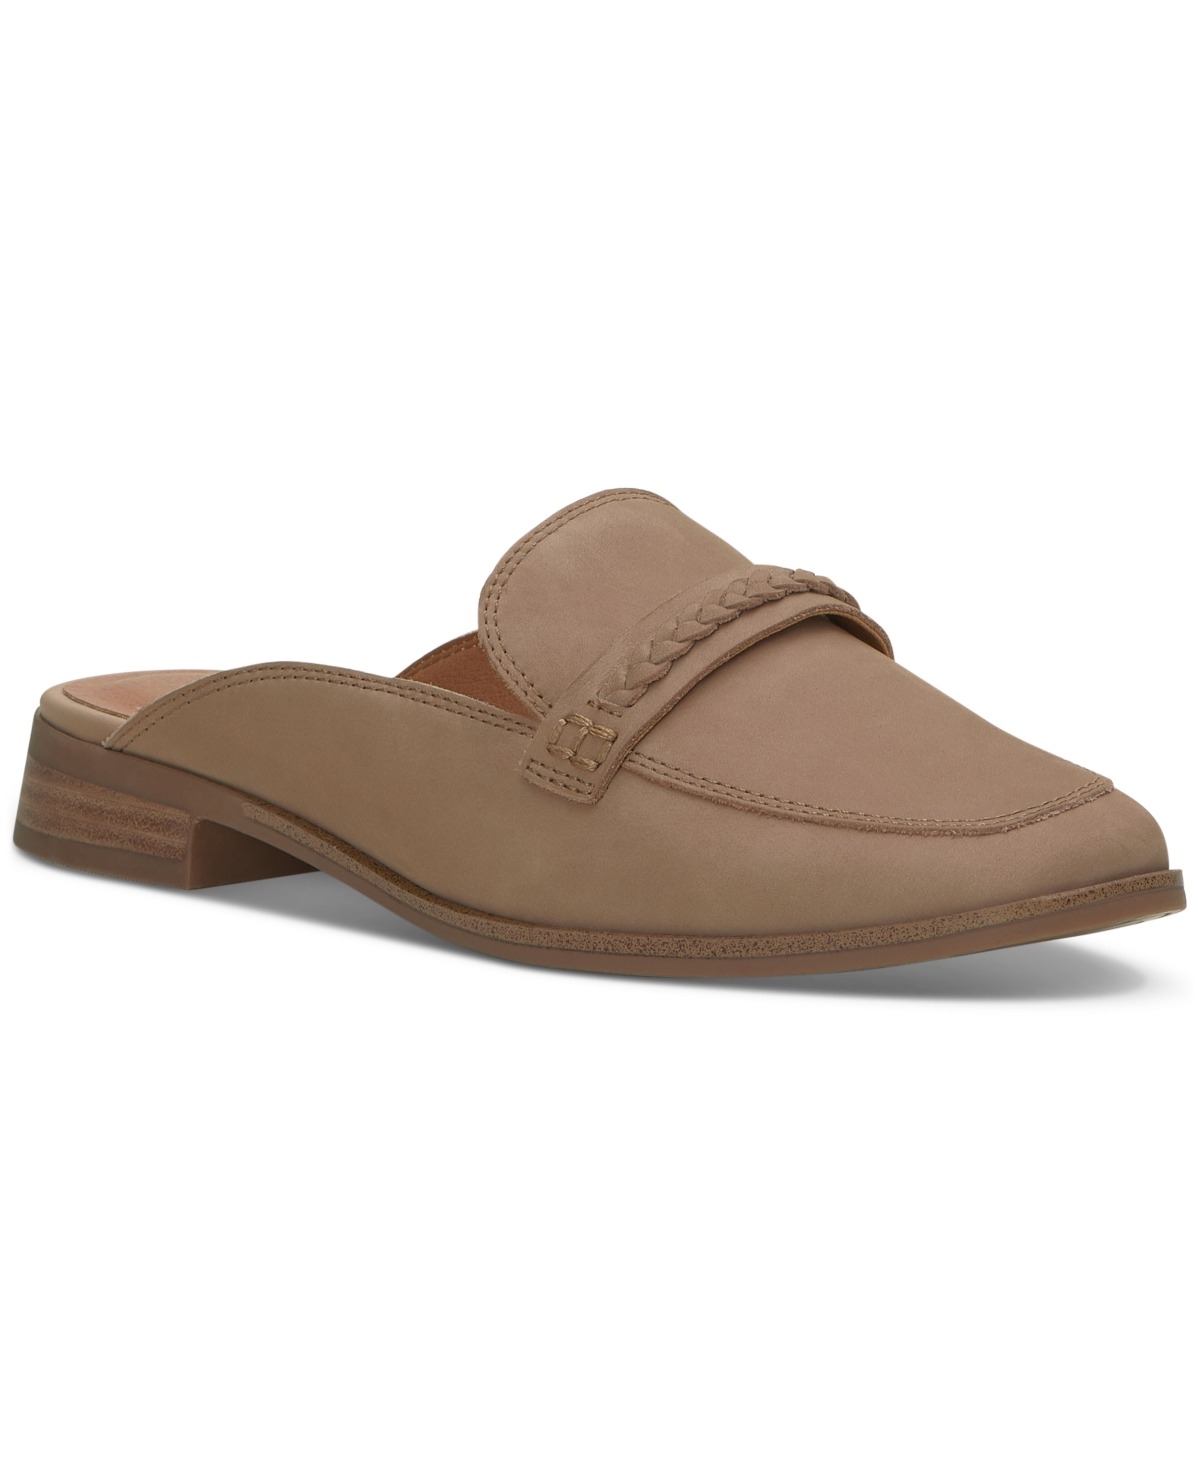 Women's Linox Flat Slip-On Mule Loafers - Tawny Brown Leather